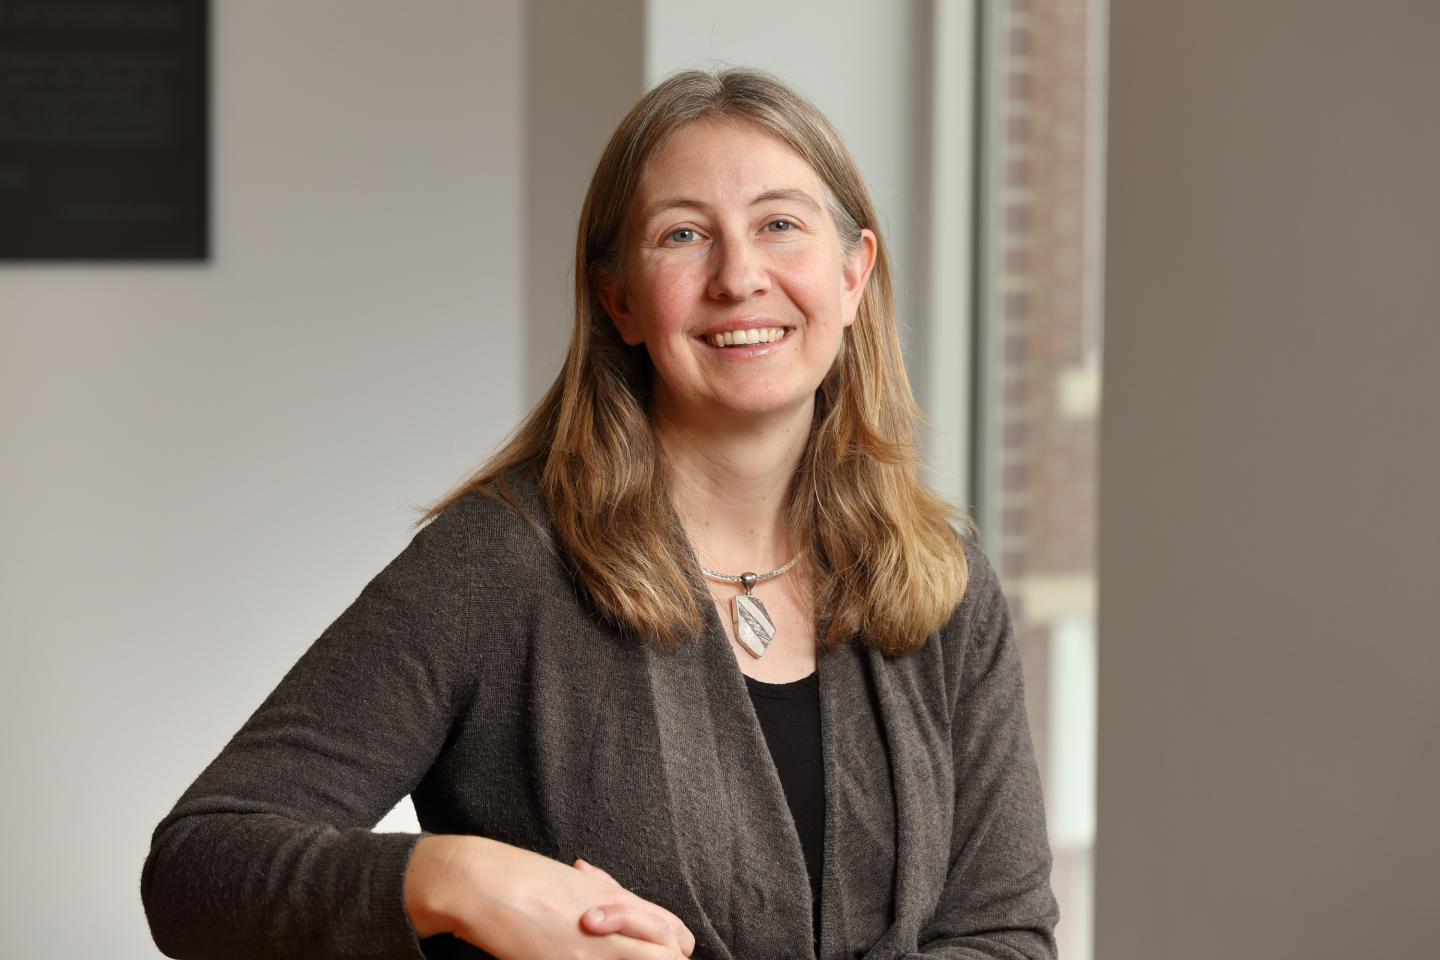 UVA Engineering Professor Kristen Naegle